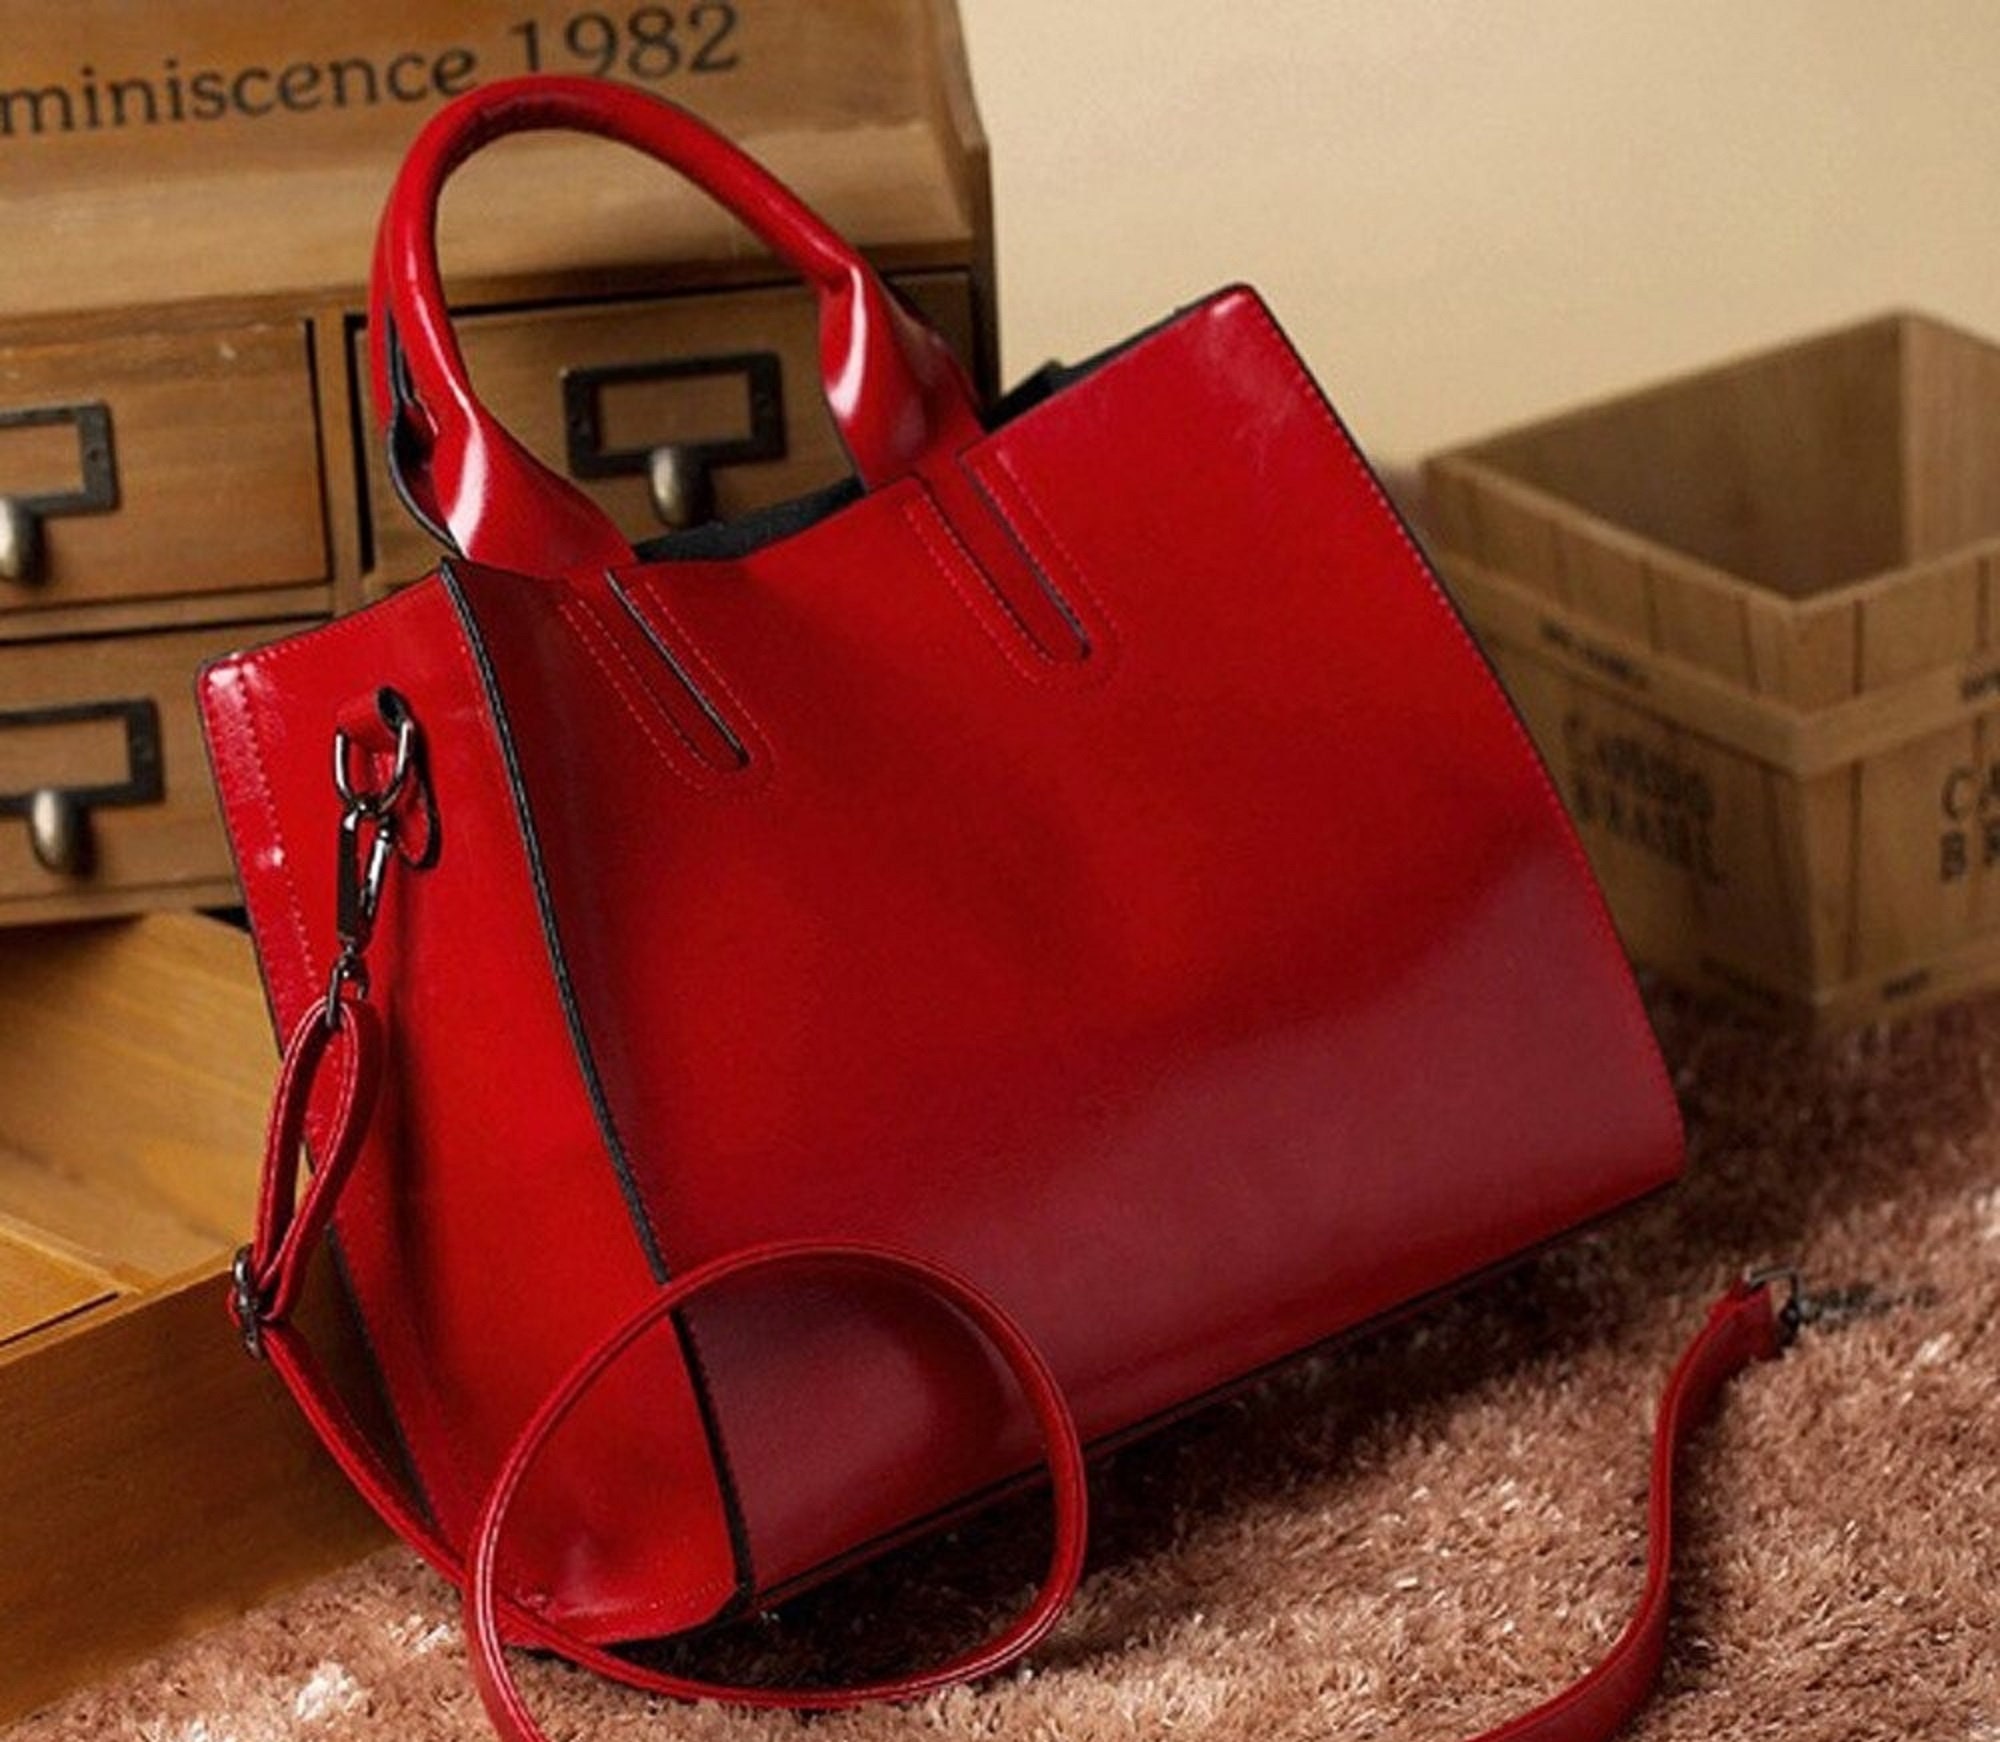 ZiMing Women's Glossy Patent Leather Handbags